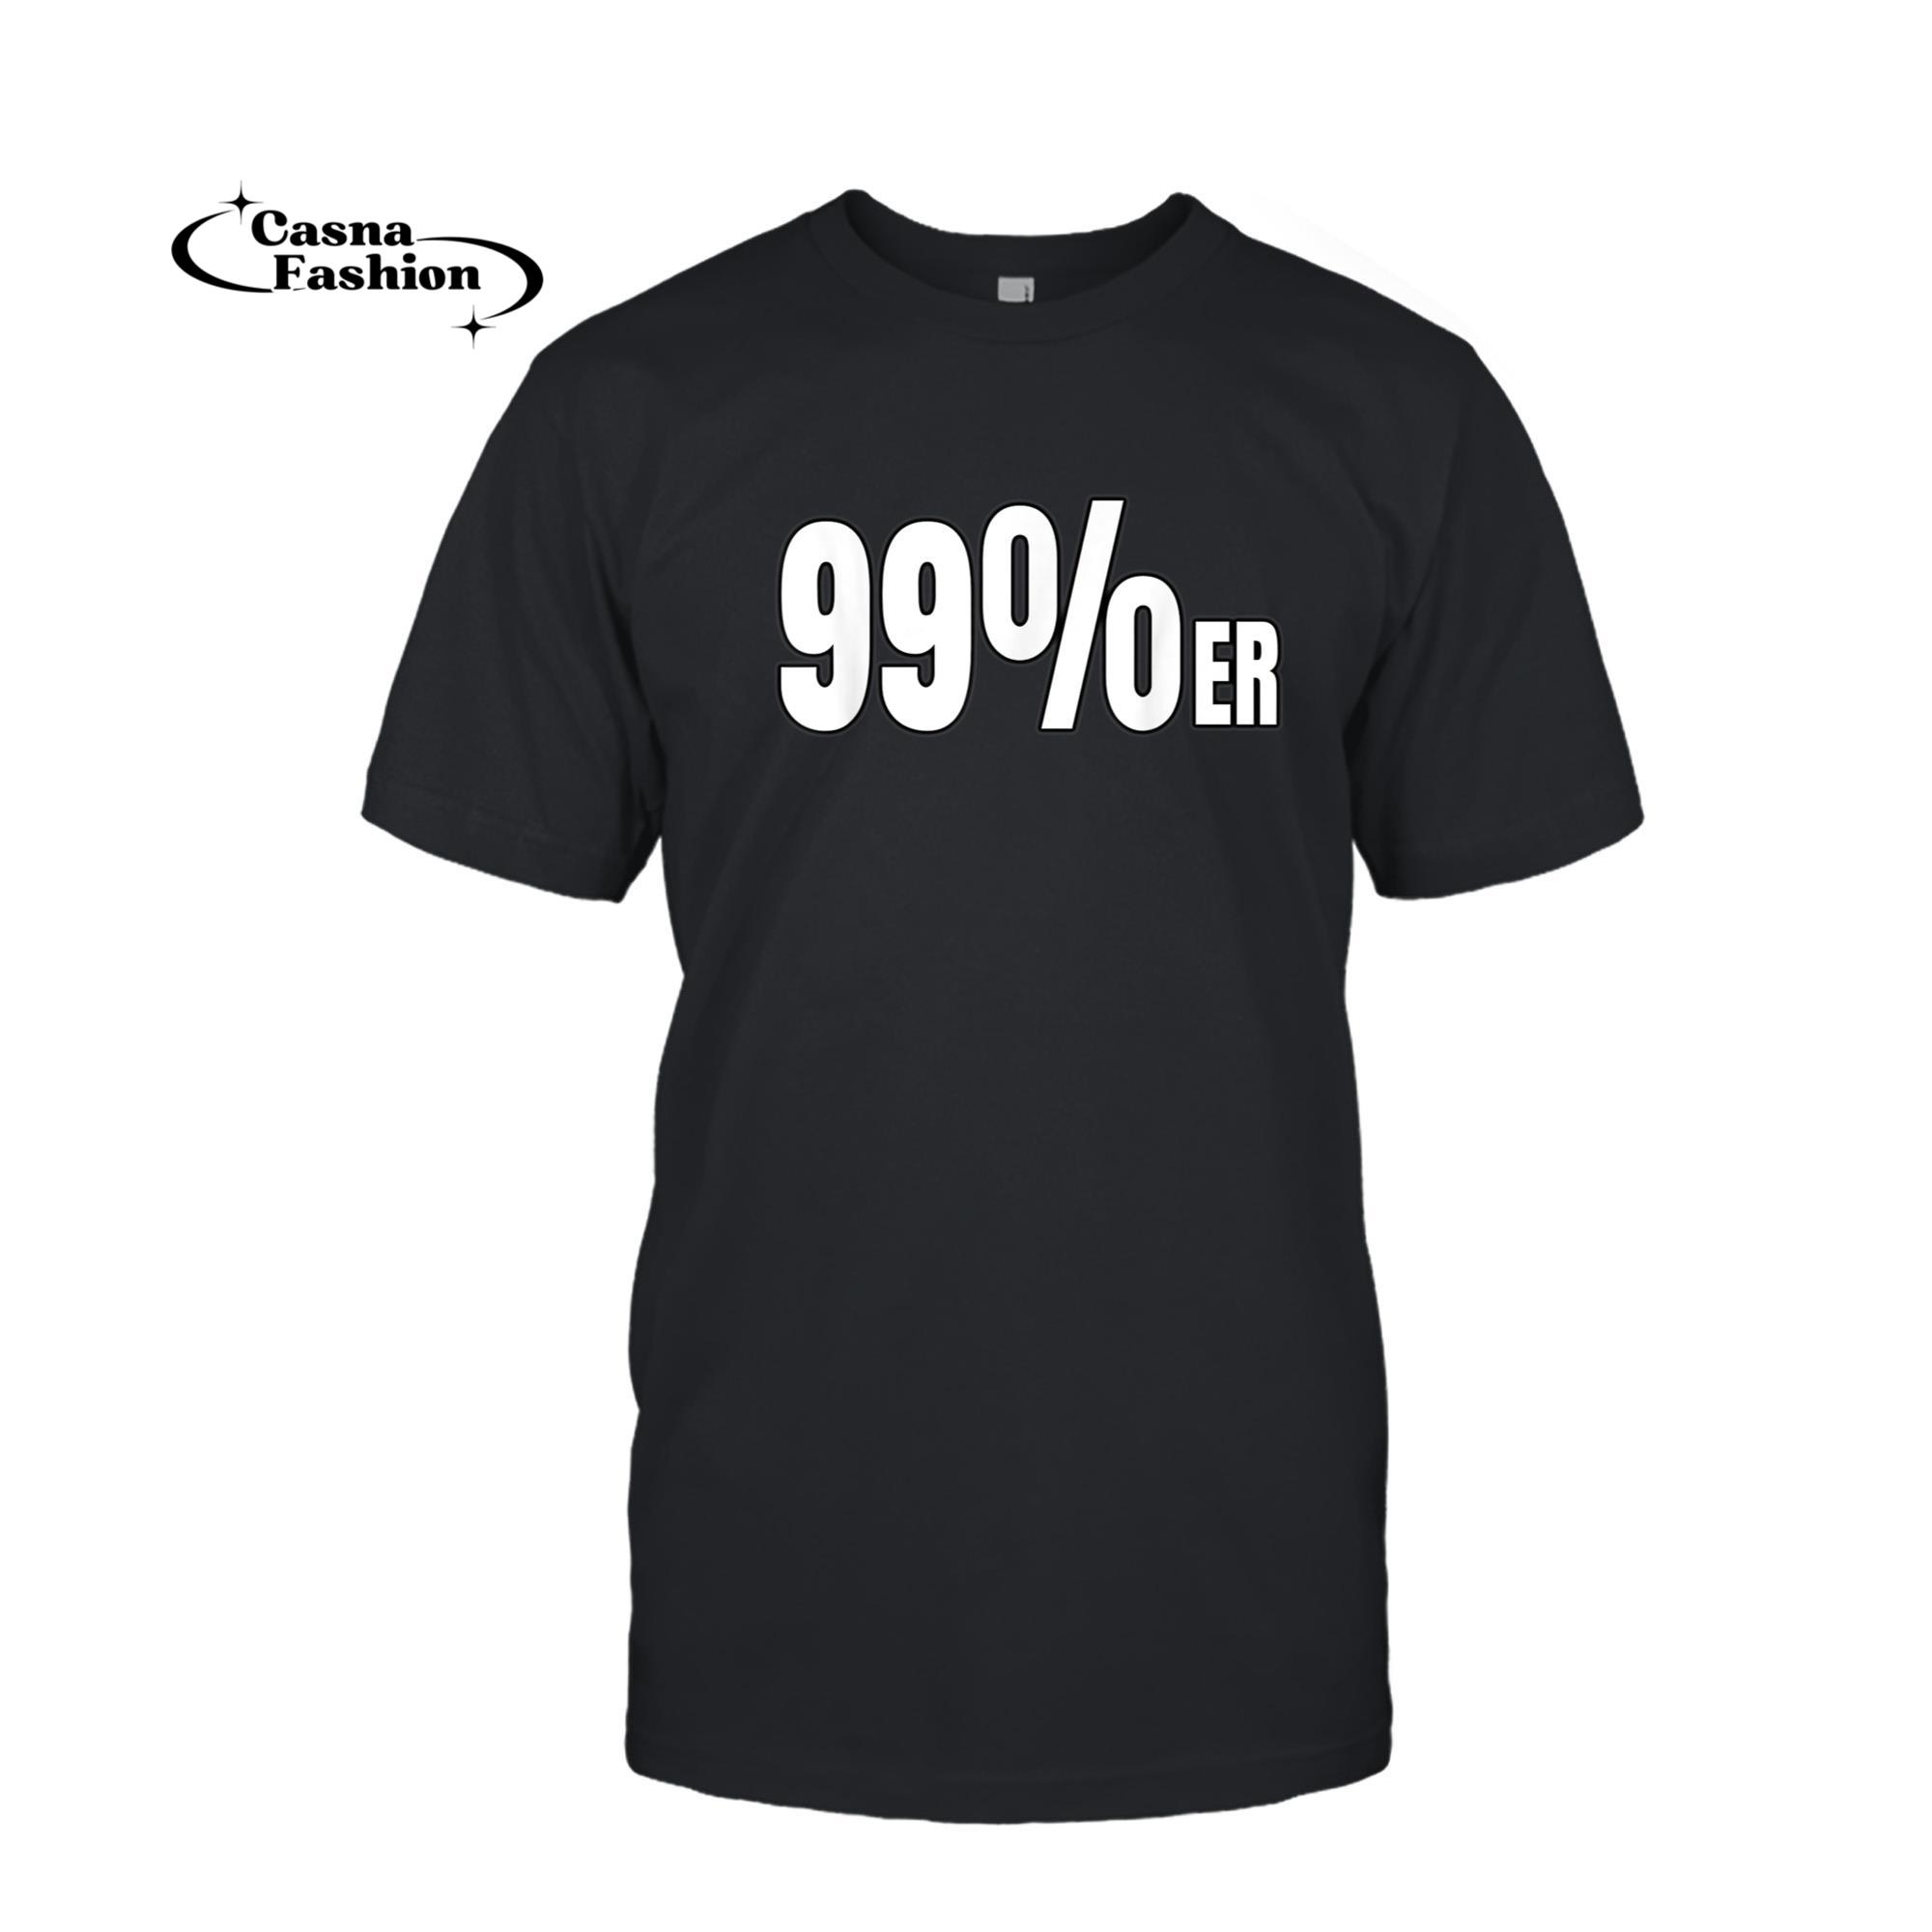 casnafashion_T-shirt_99%er Biker T-Shirt_T-shirt_Black